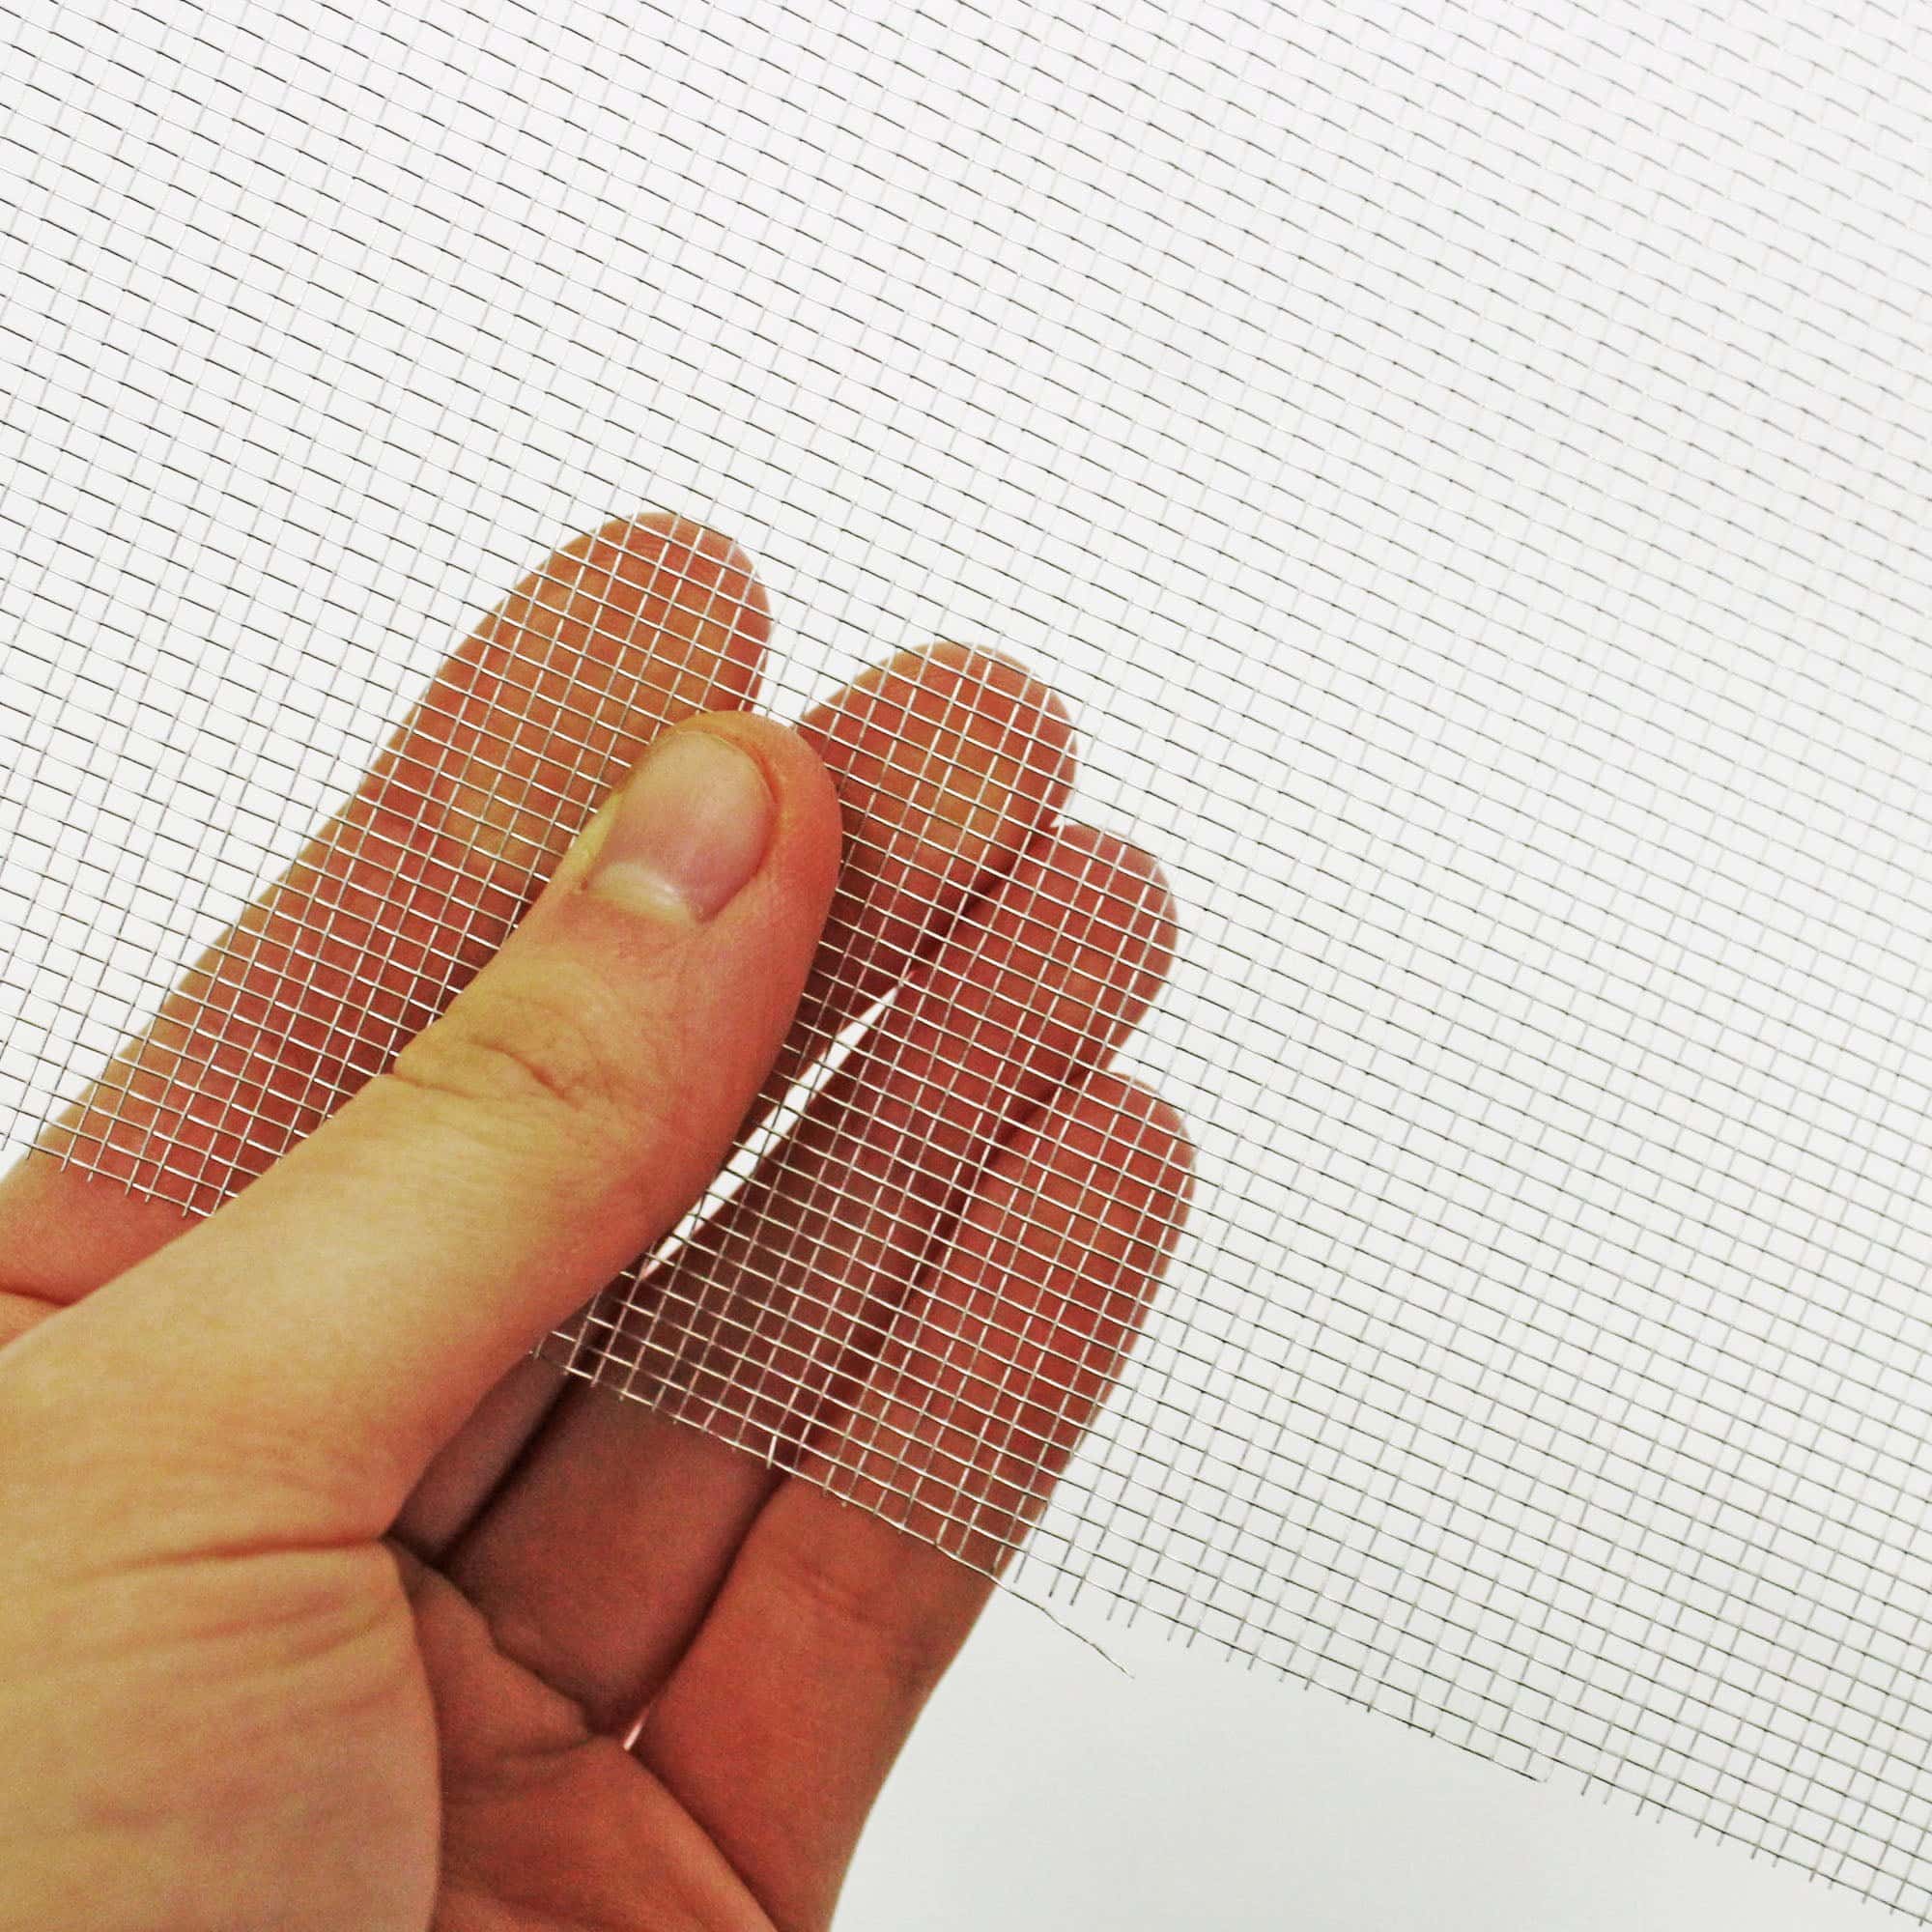 1.13 x 1.31mm Hole Aluminium Window Fly Screen Wire Mesh - 0.28mm Wire - 18  x 16 LPI - The Mesh Company